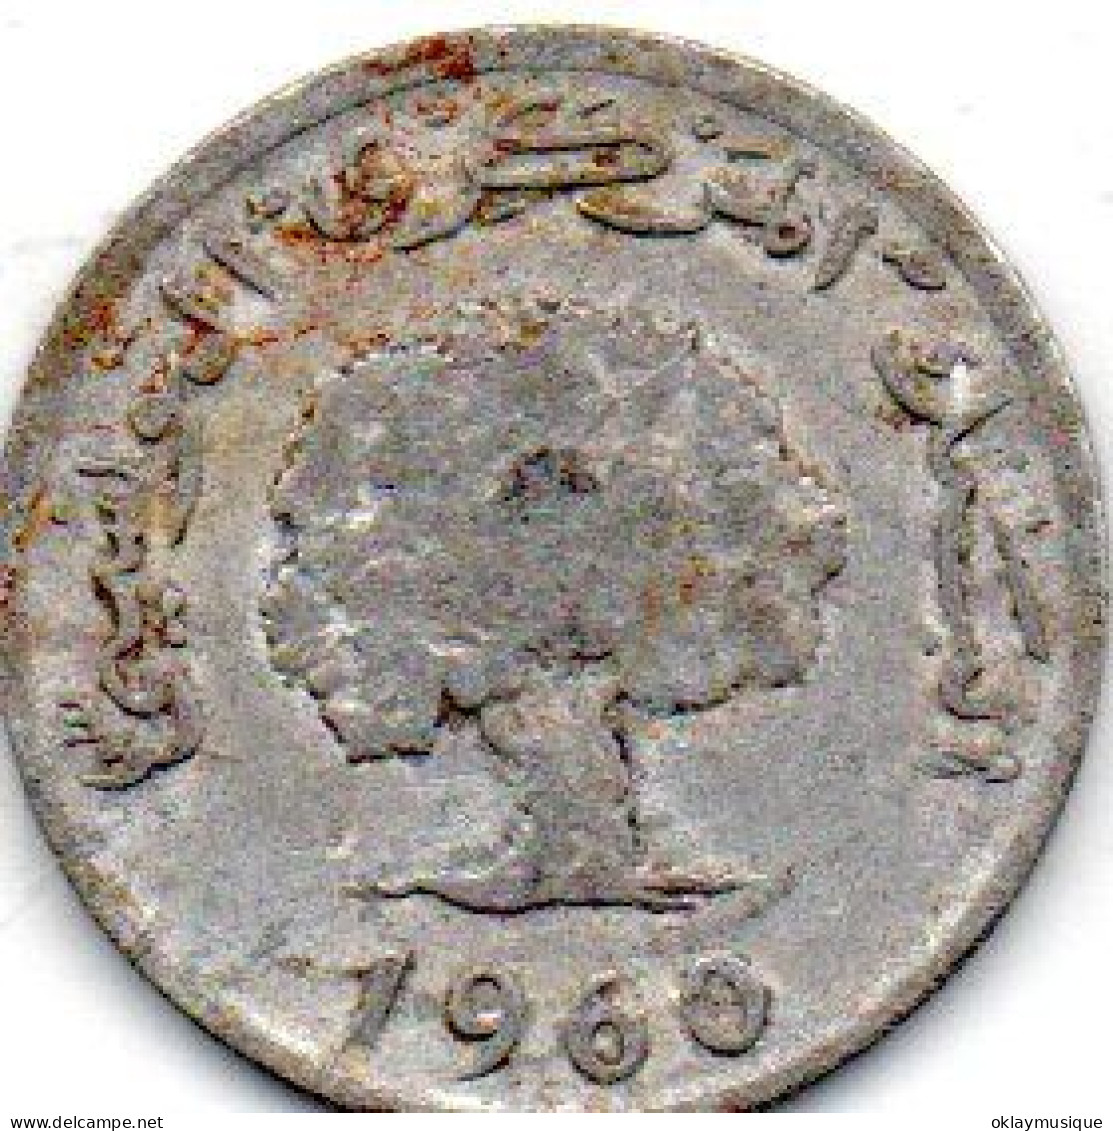 5 Millimes 1960 - Tunisia